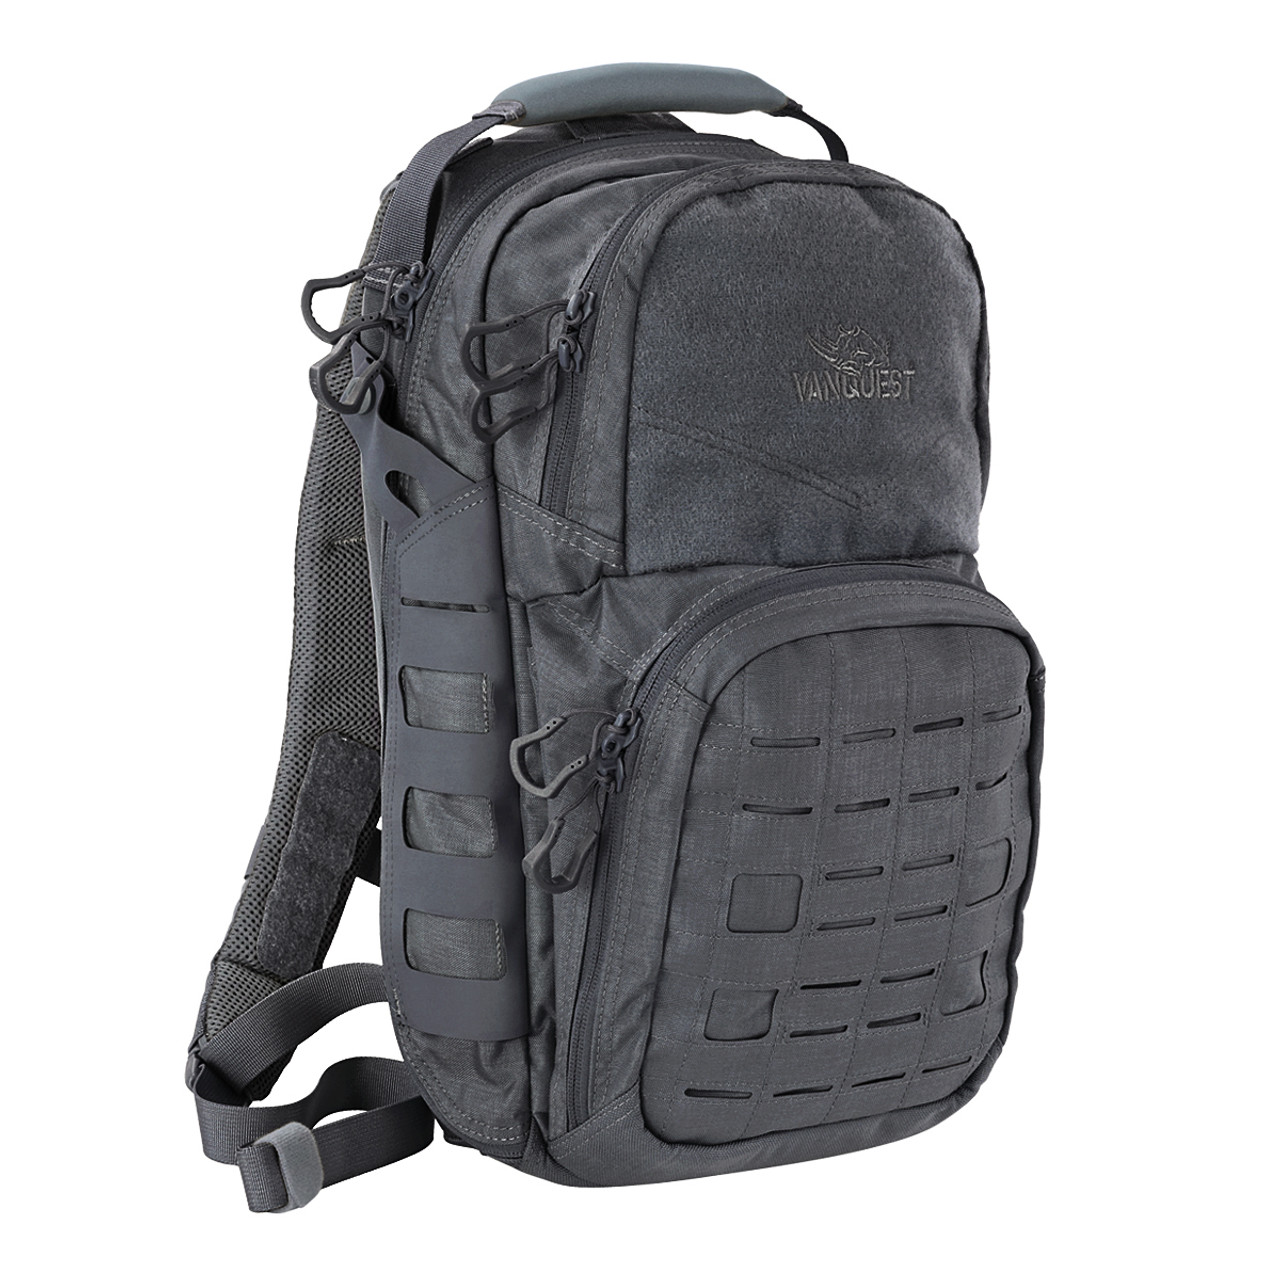 KATARA-16 Sling Backpack - Vanquest Tough-Built Gear